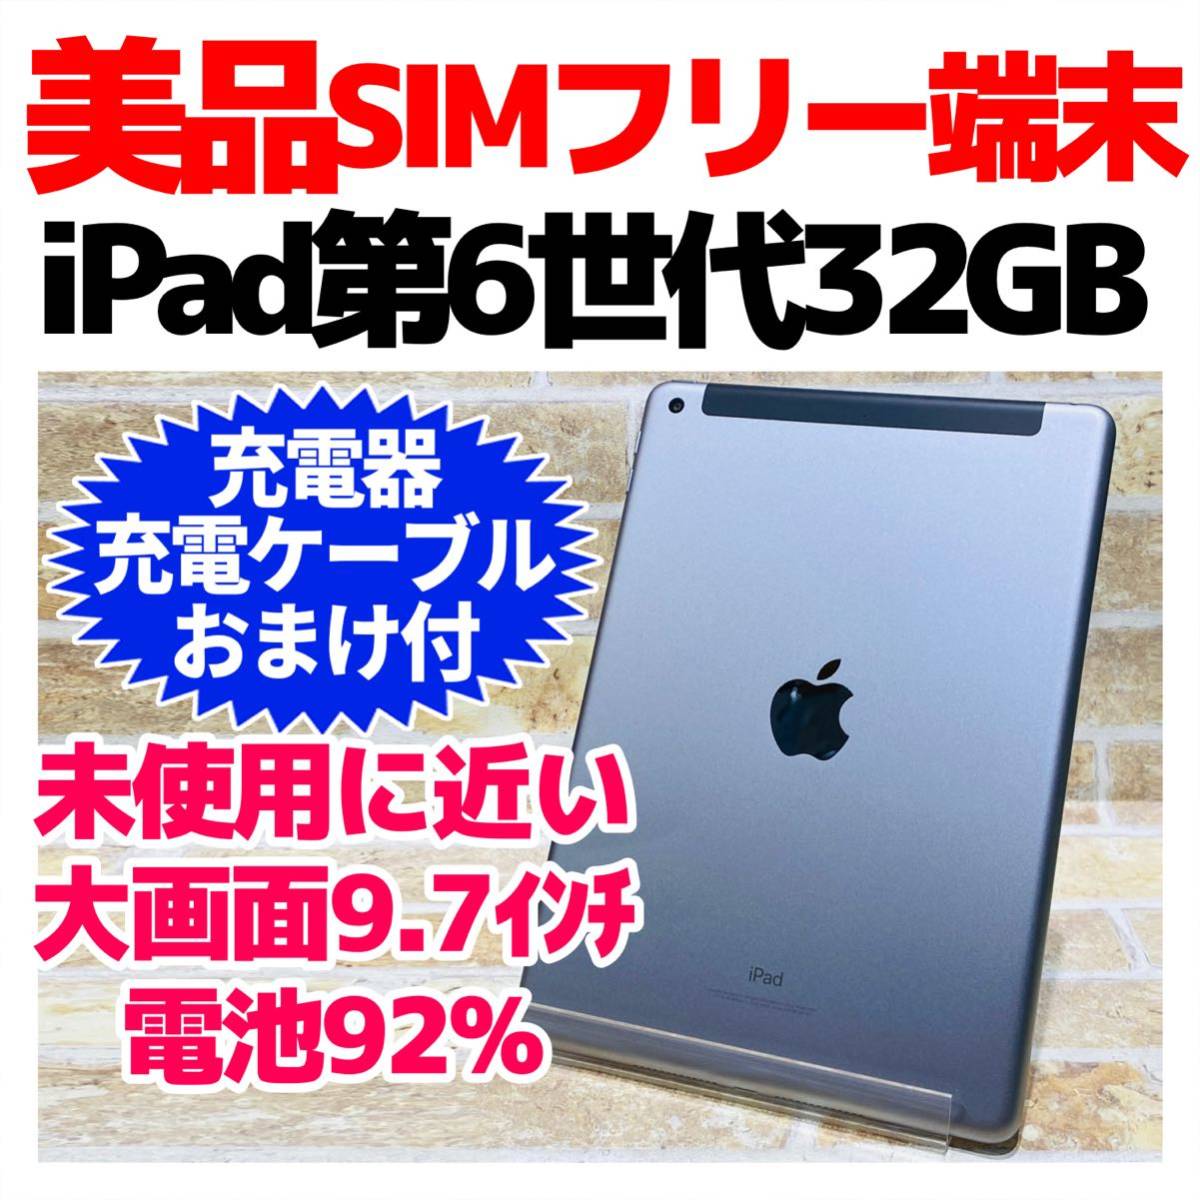 iPad 128GB第6世代 2018ピンクゴールド | autoteileexpress-shop.ch